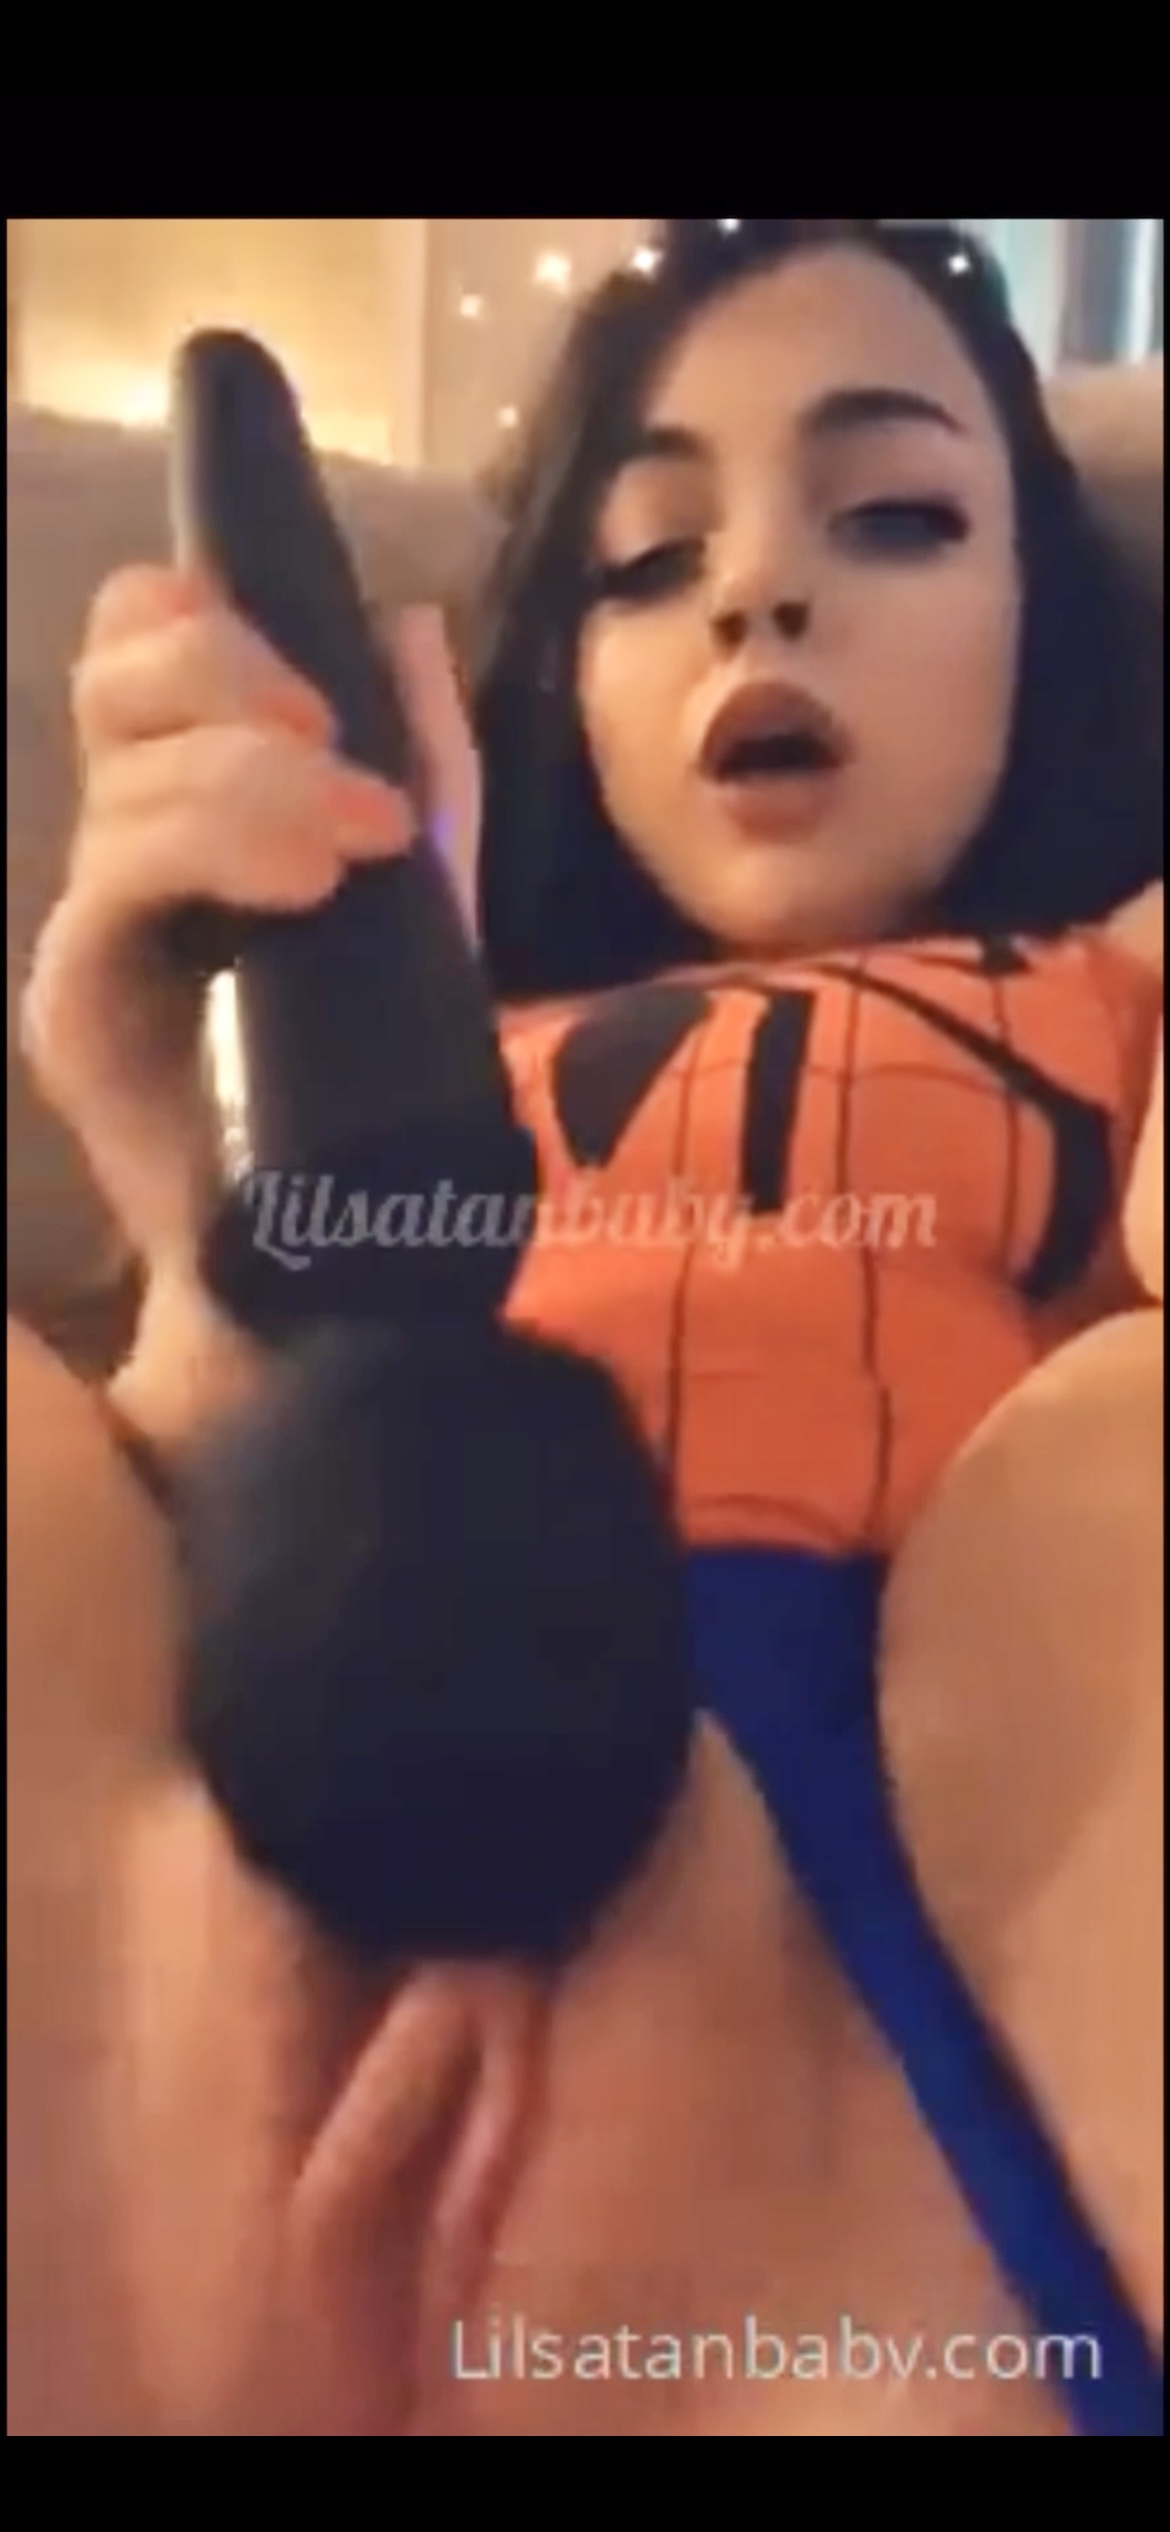 Lilsatanbaby cums with hitachi vibrator